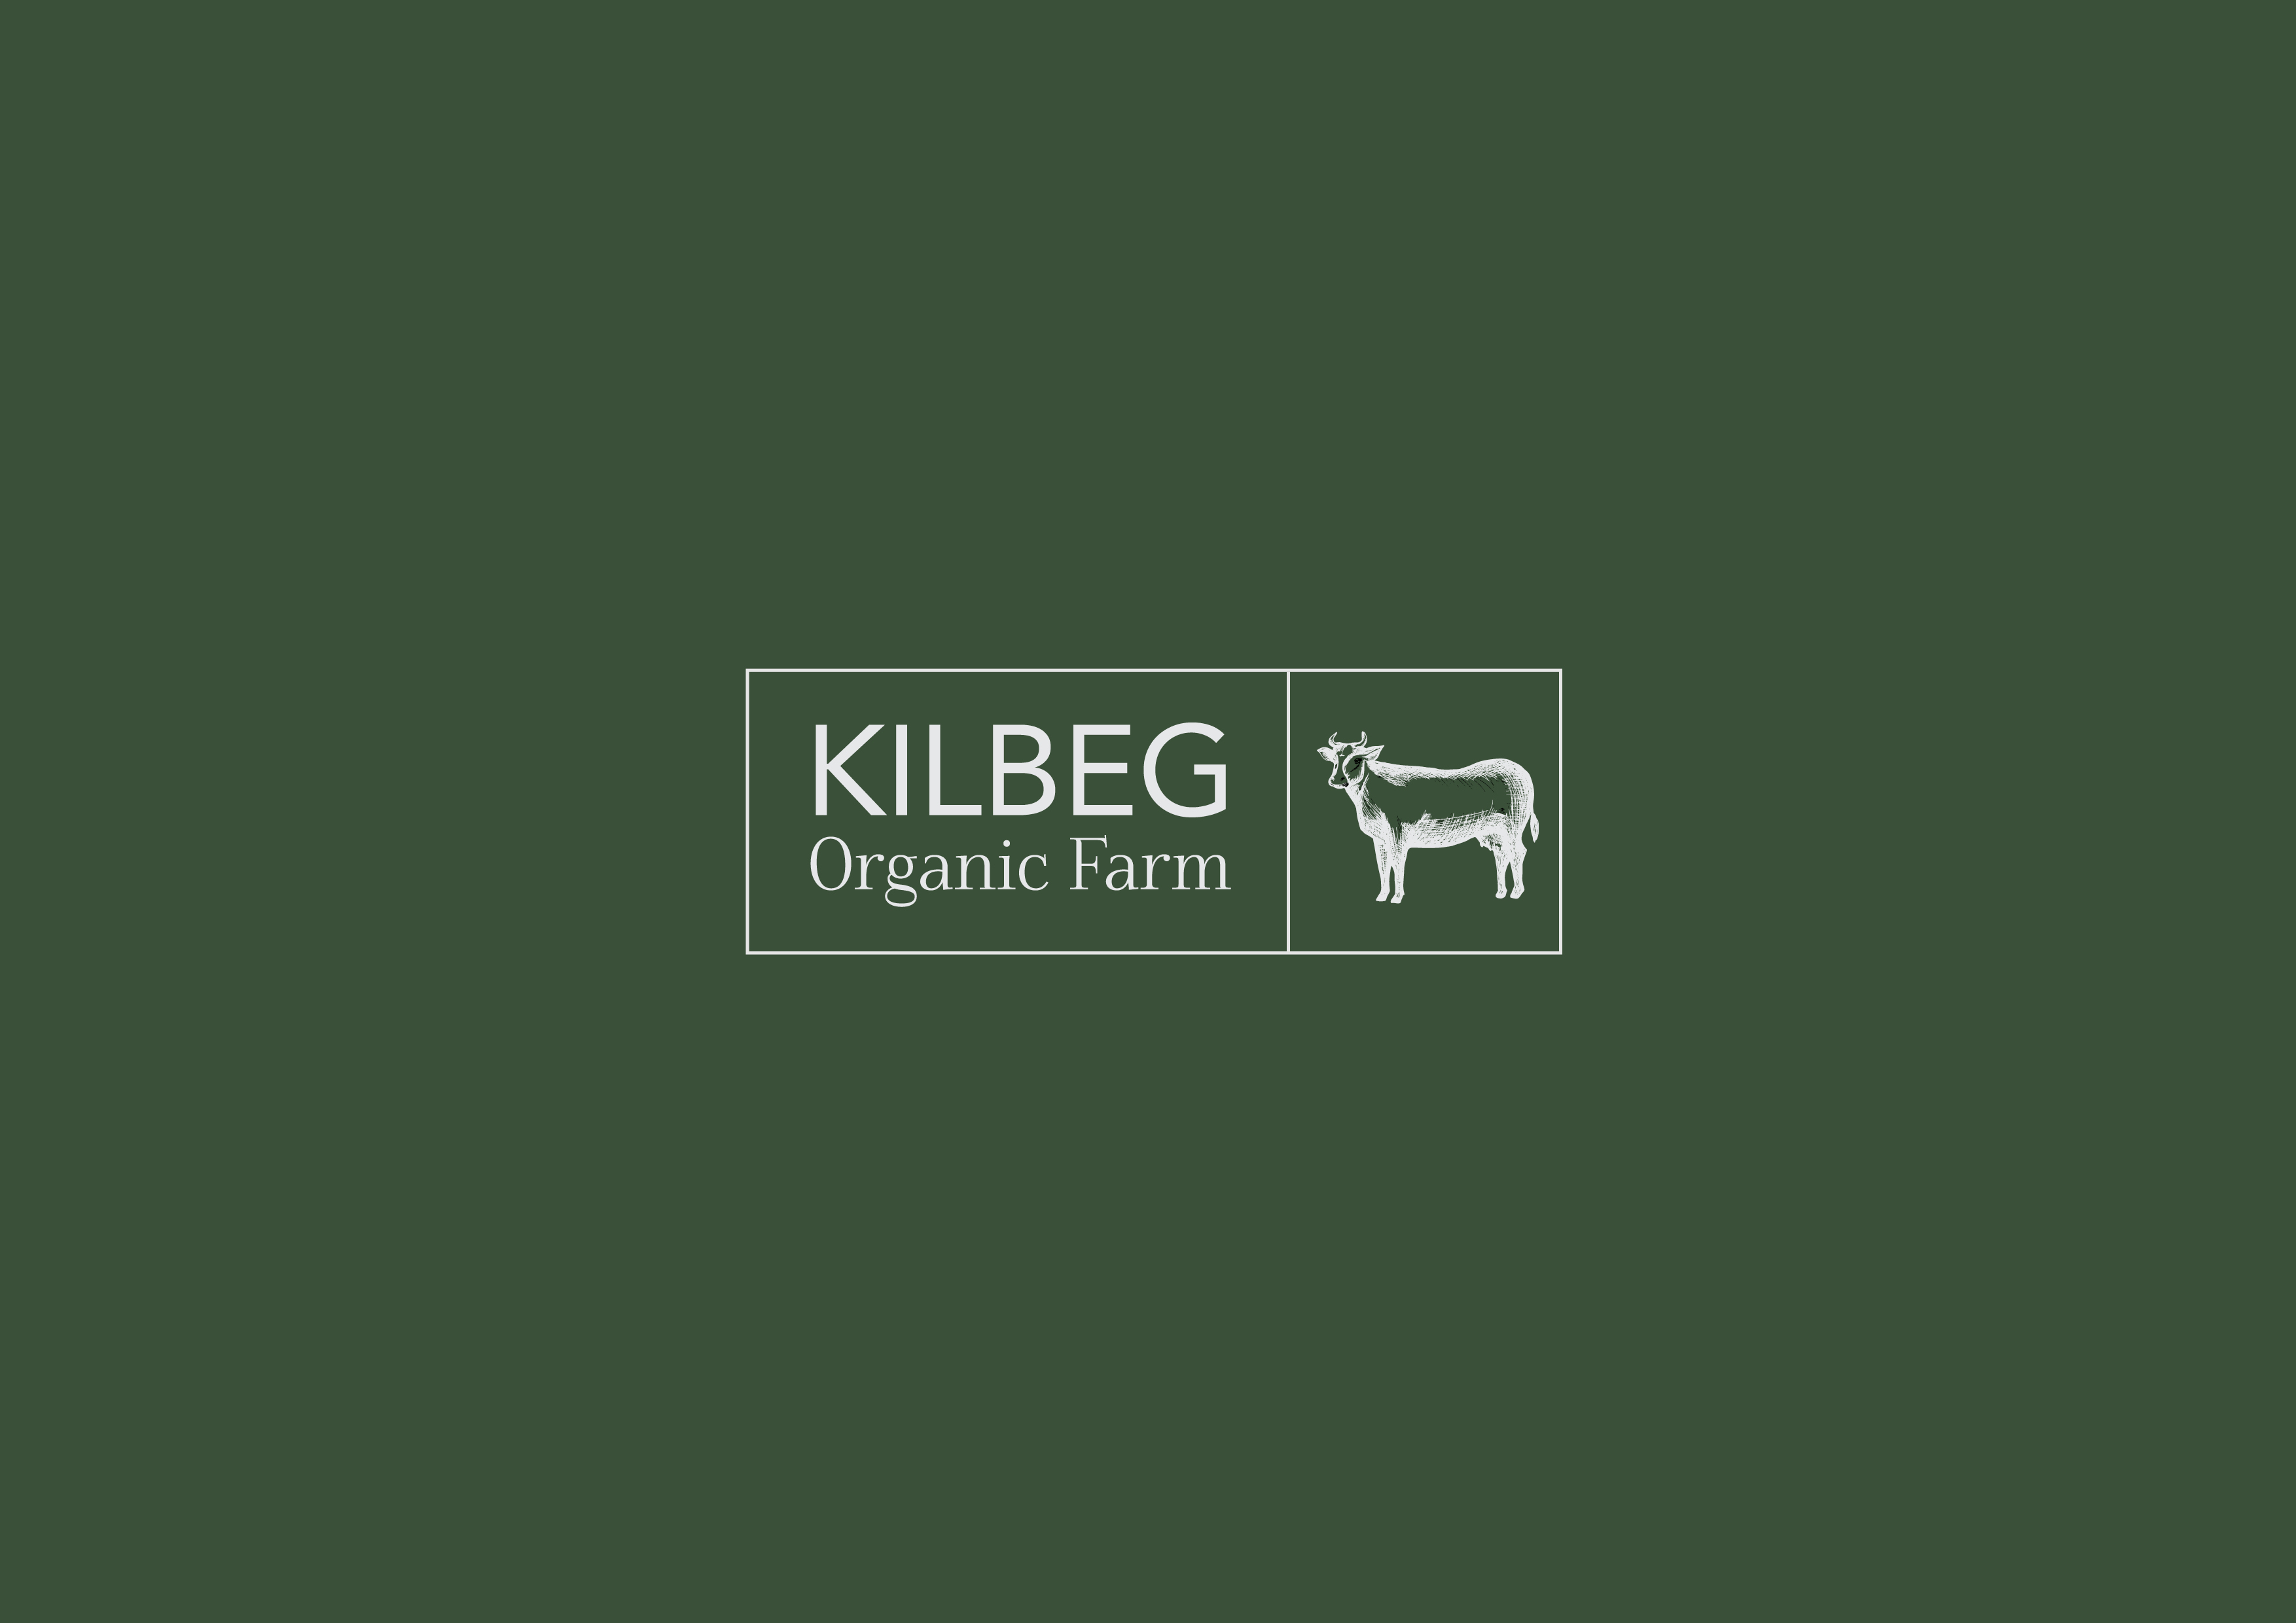 Kilbeg Organic Farm